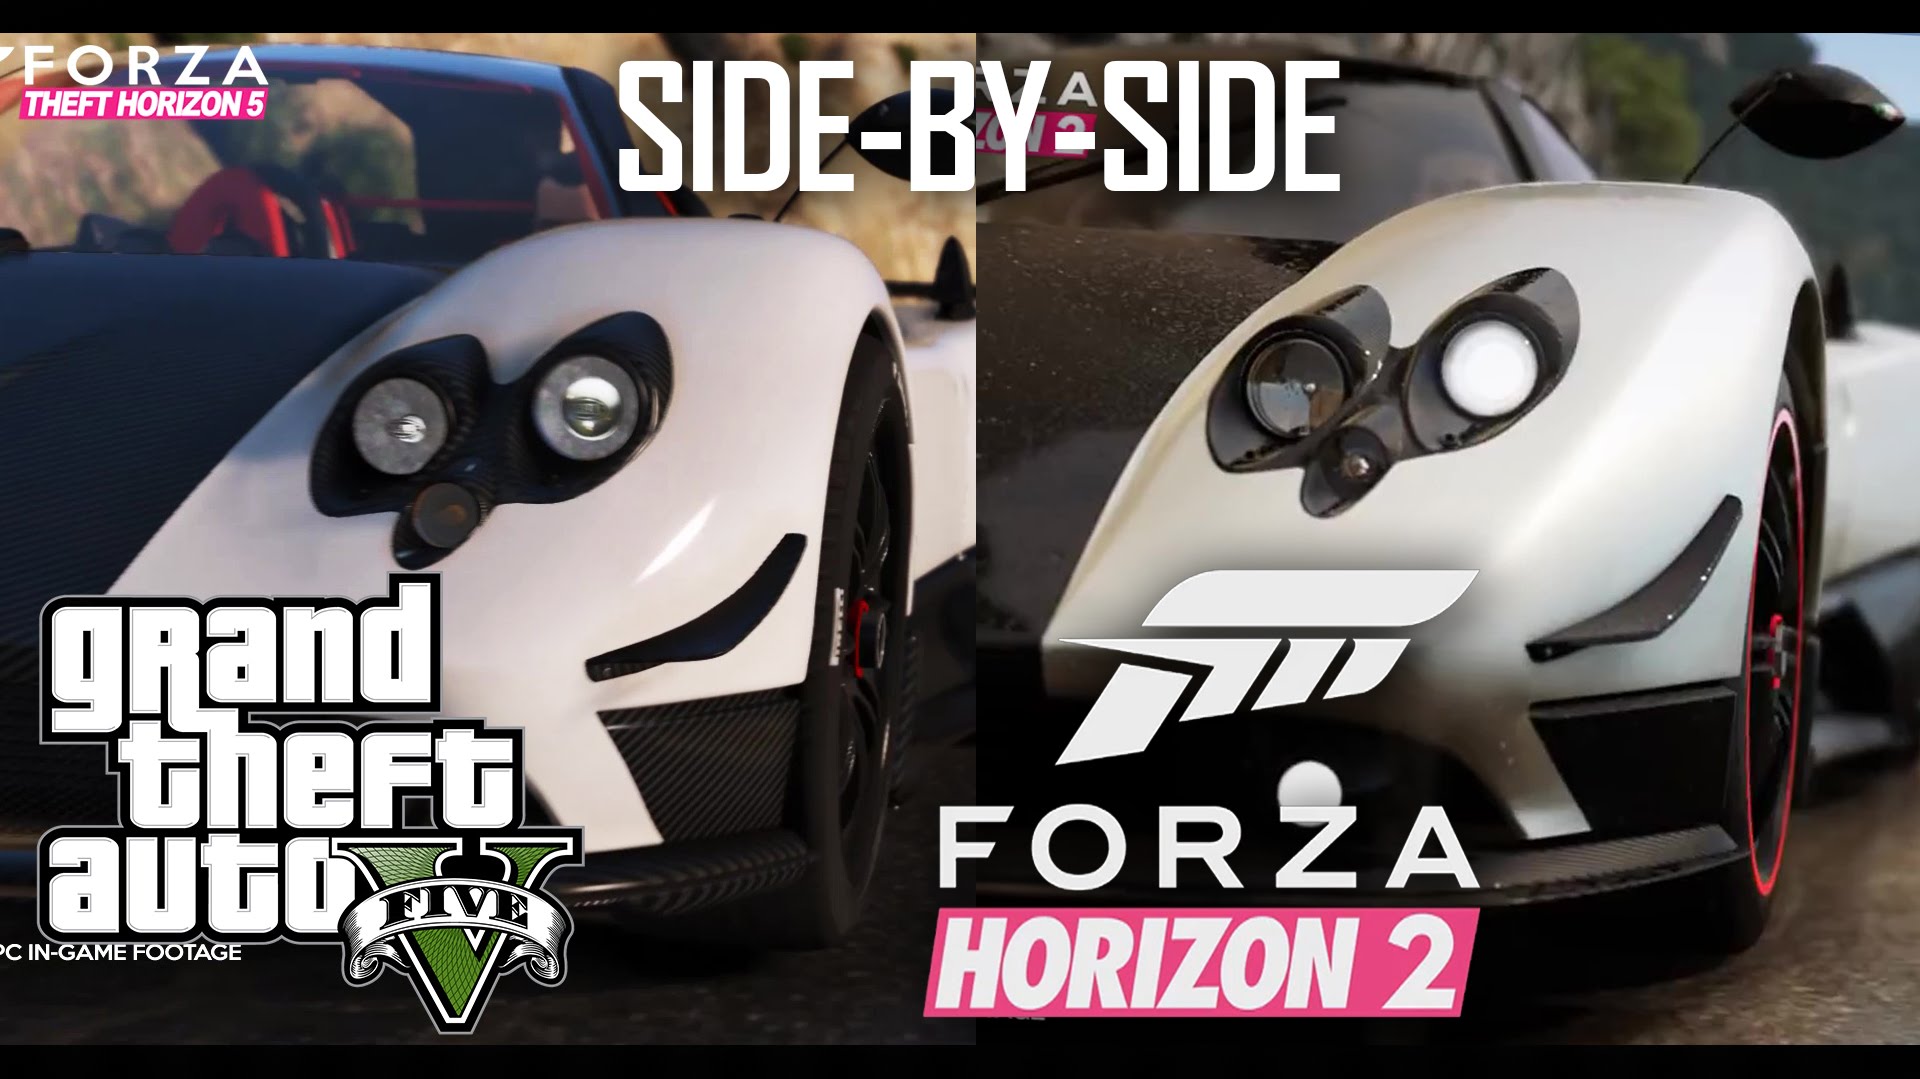 Forza Horizon 6 Trailer 